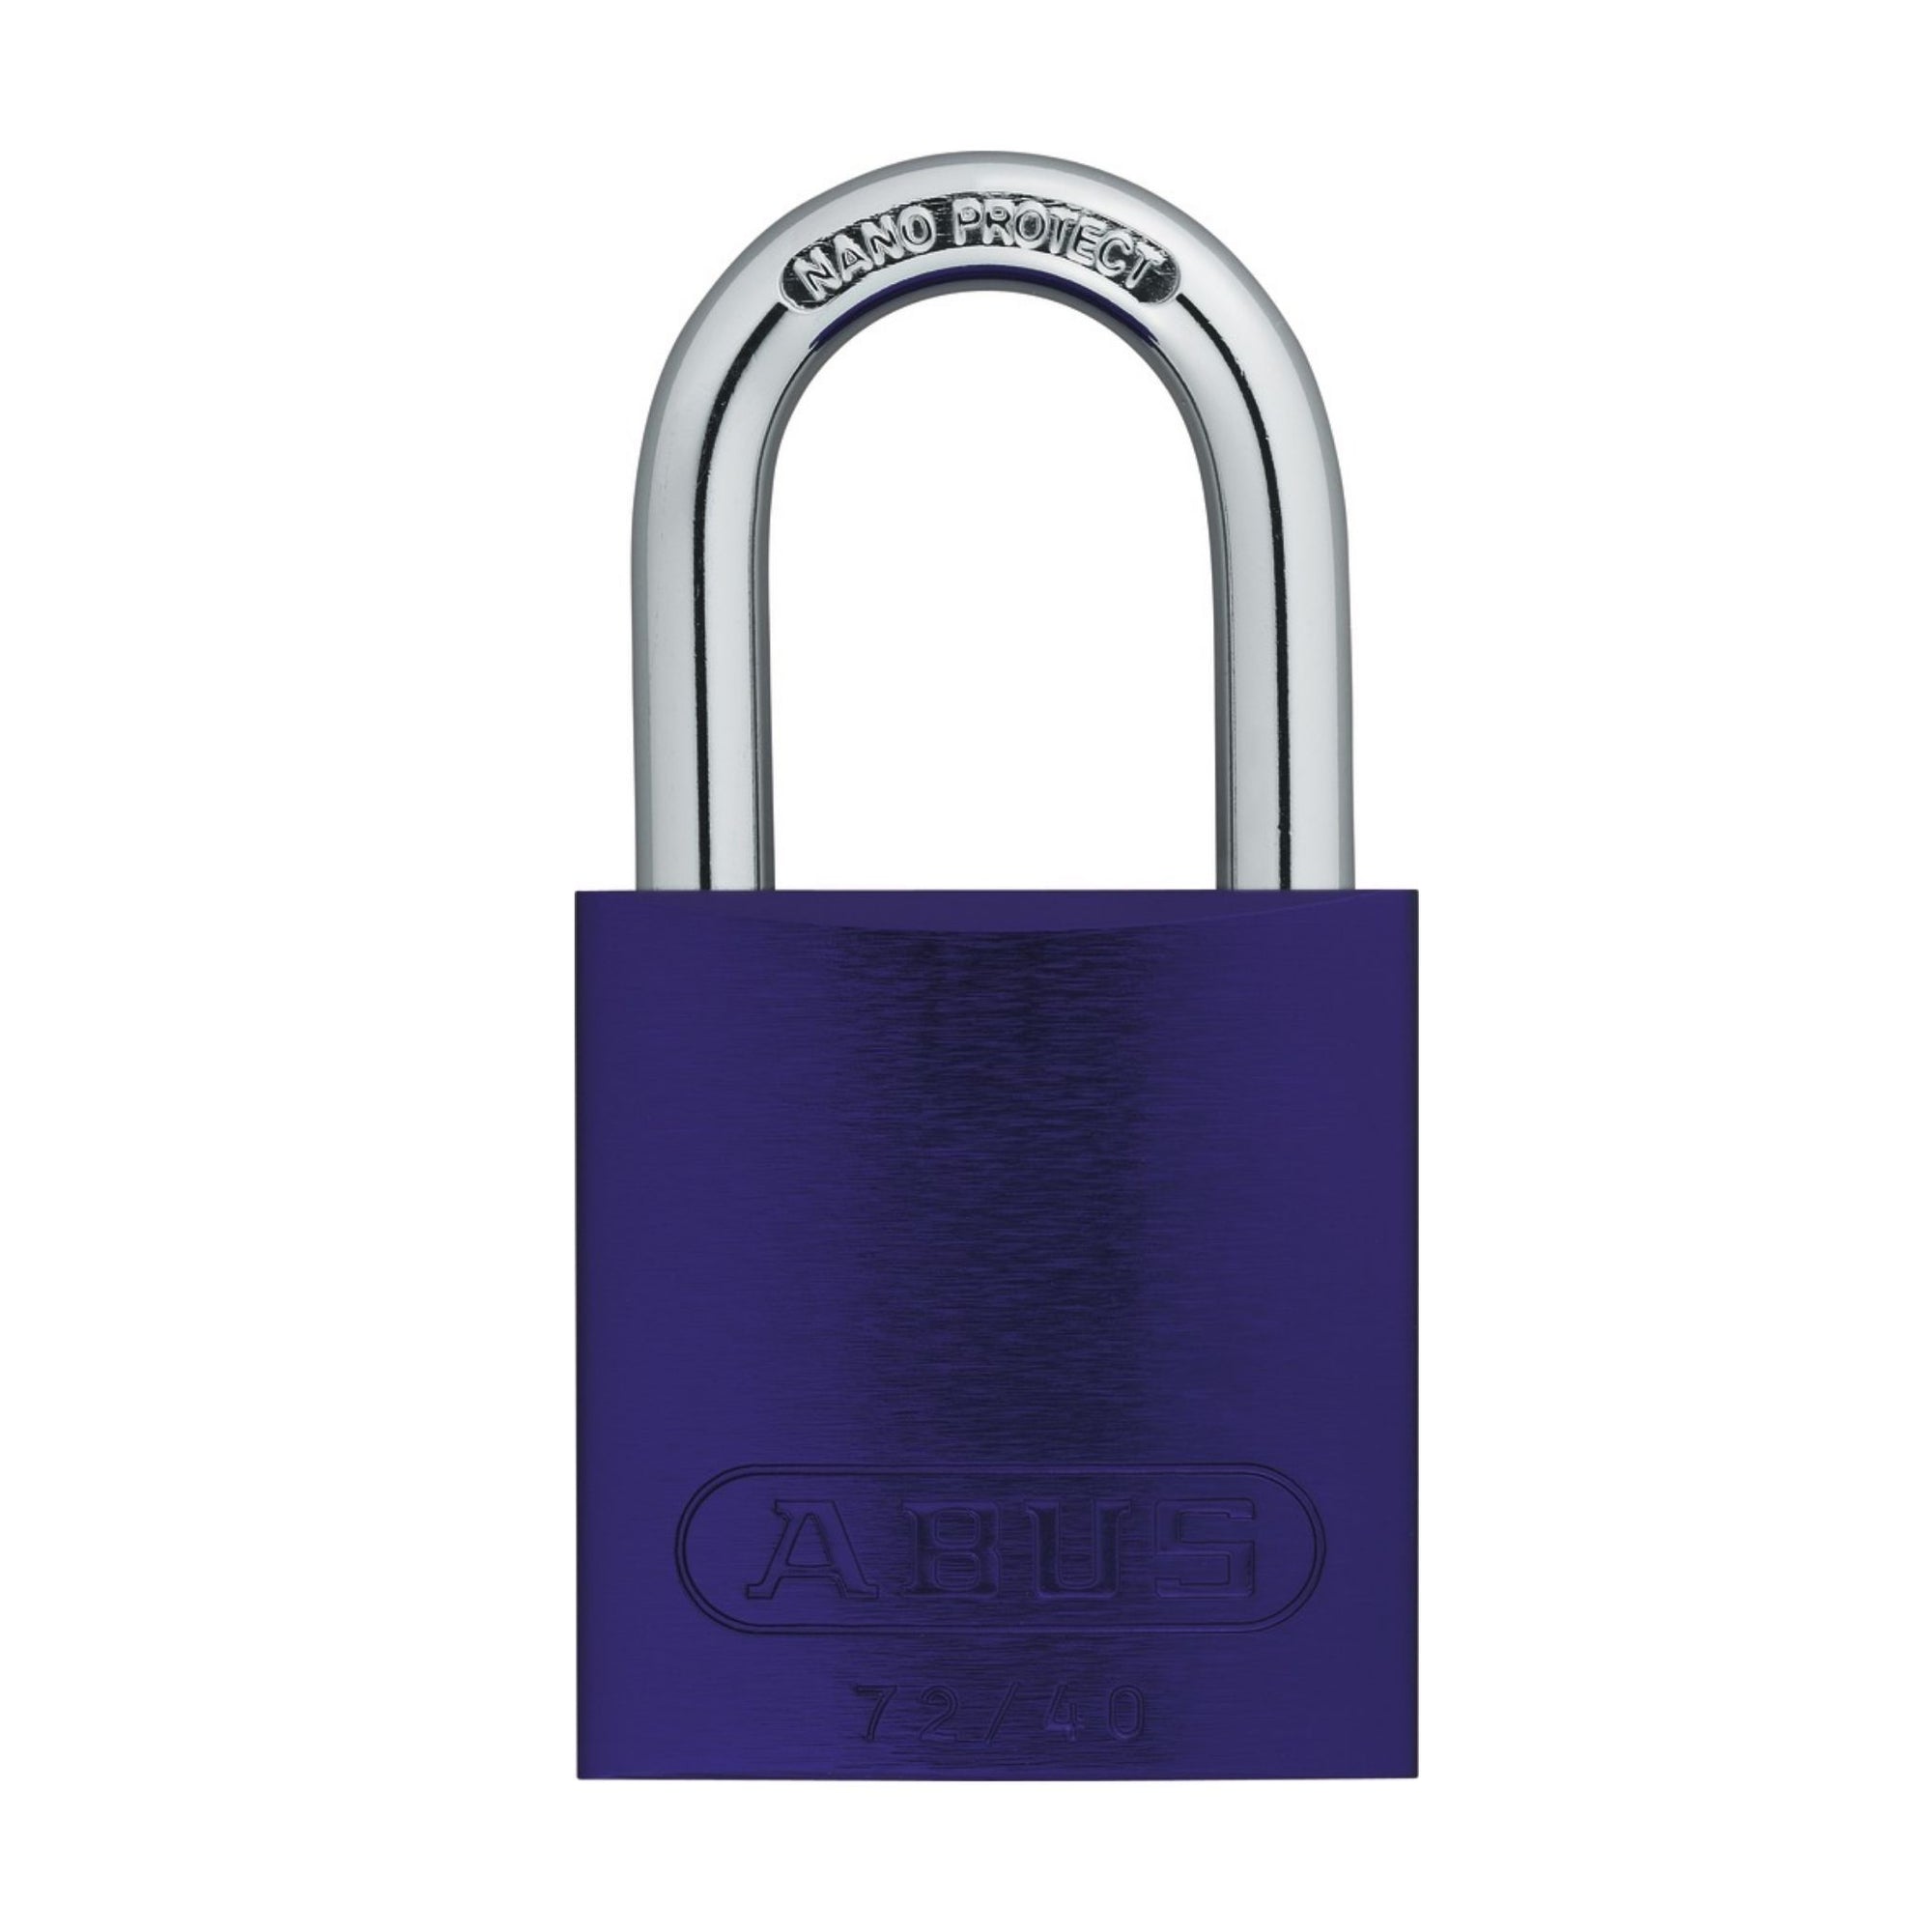 Abus 72/40 KA TT00036 Purple Titalium Safety Padlock with 1-Inch Shackle, Keyed Alike to Match Existing Key Number KATT00036 - The Lock Source 